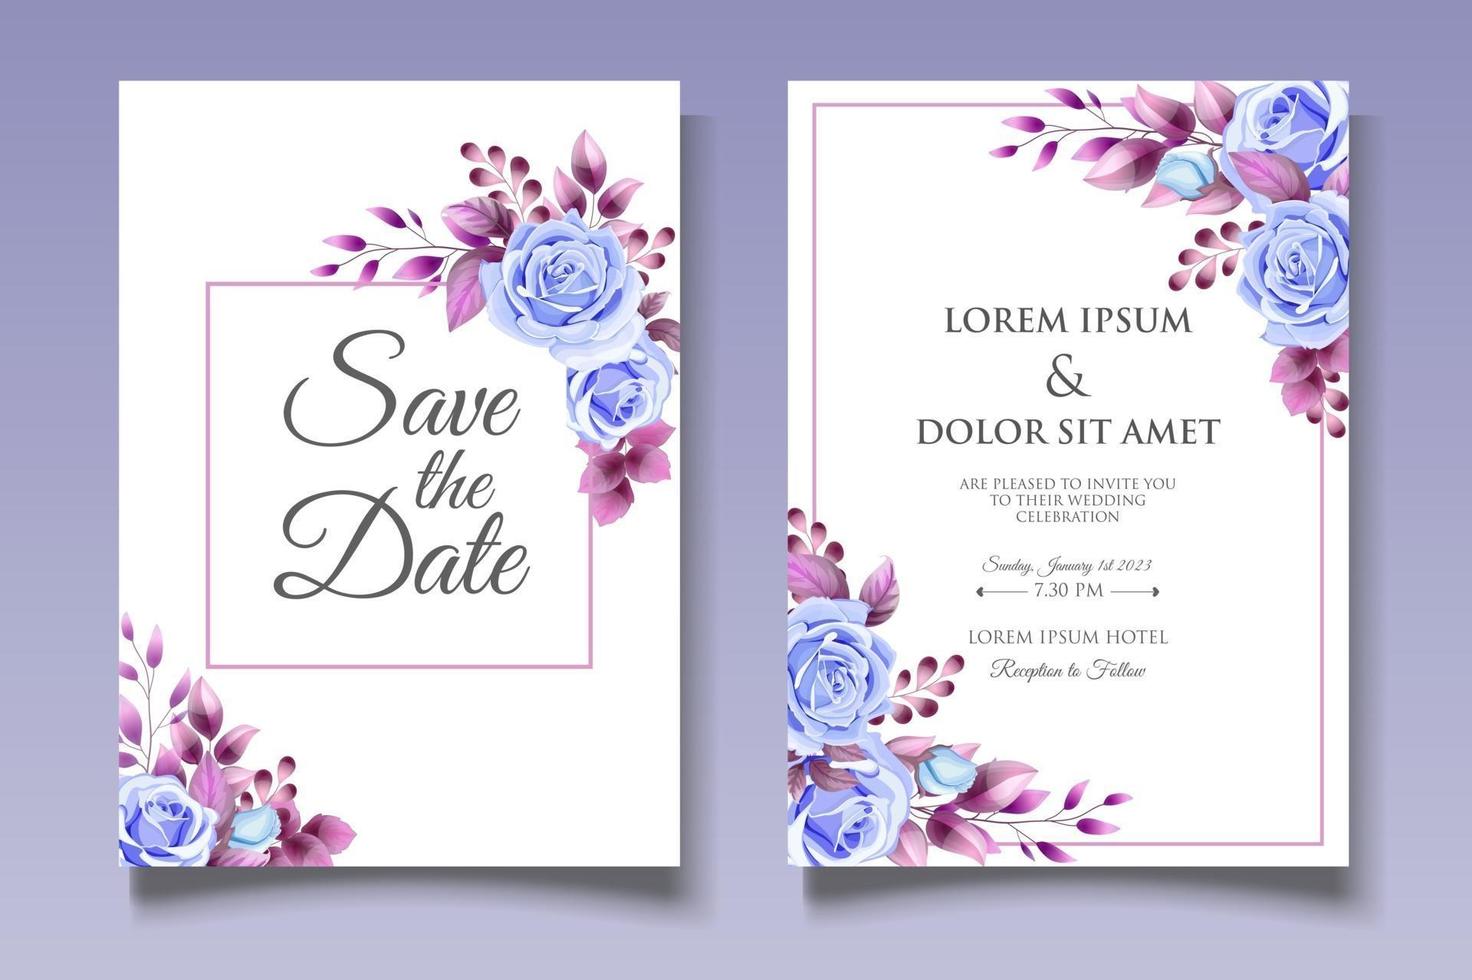 Beautiful Floral Wedding Invitation Card vector